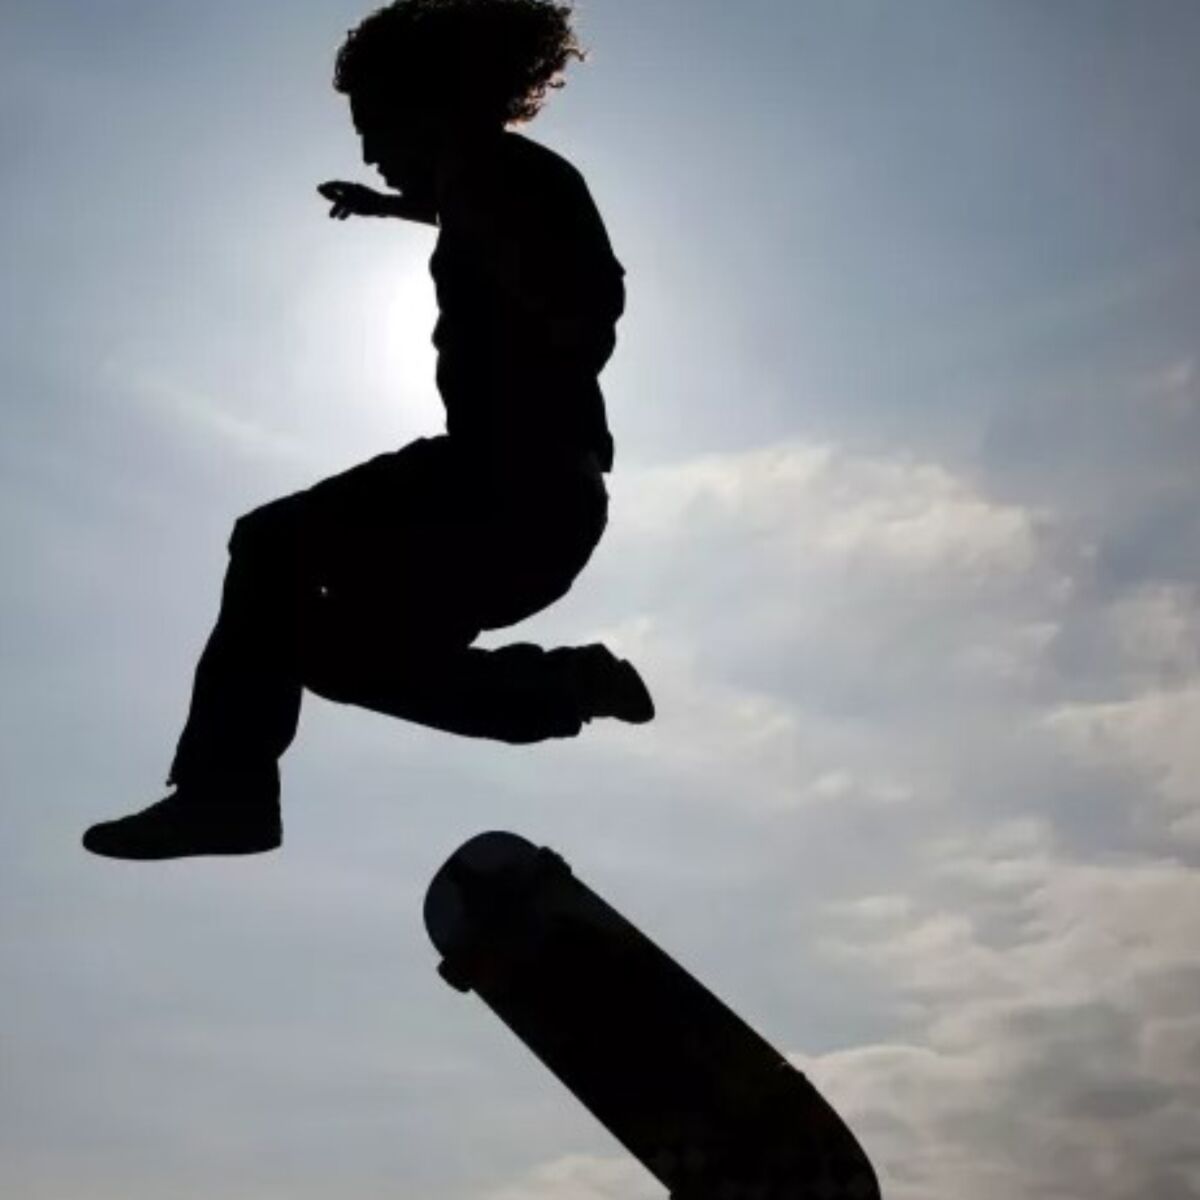 A boy jumps off his skateboard.